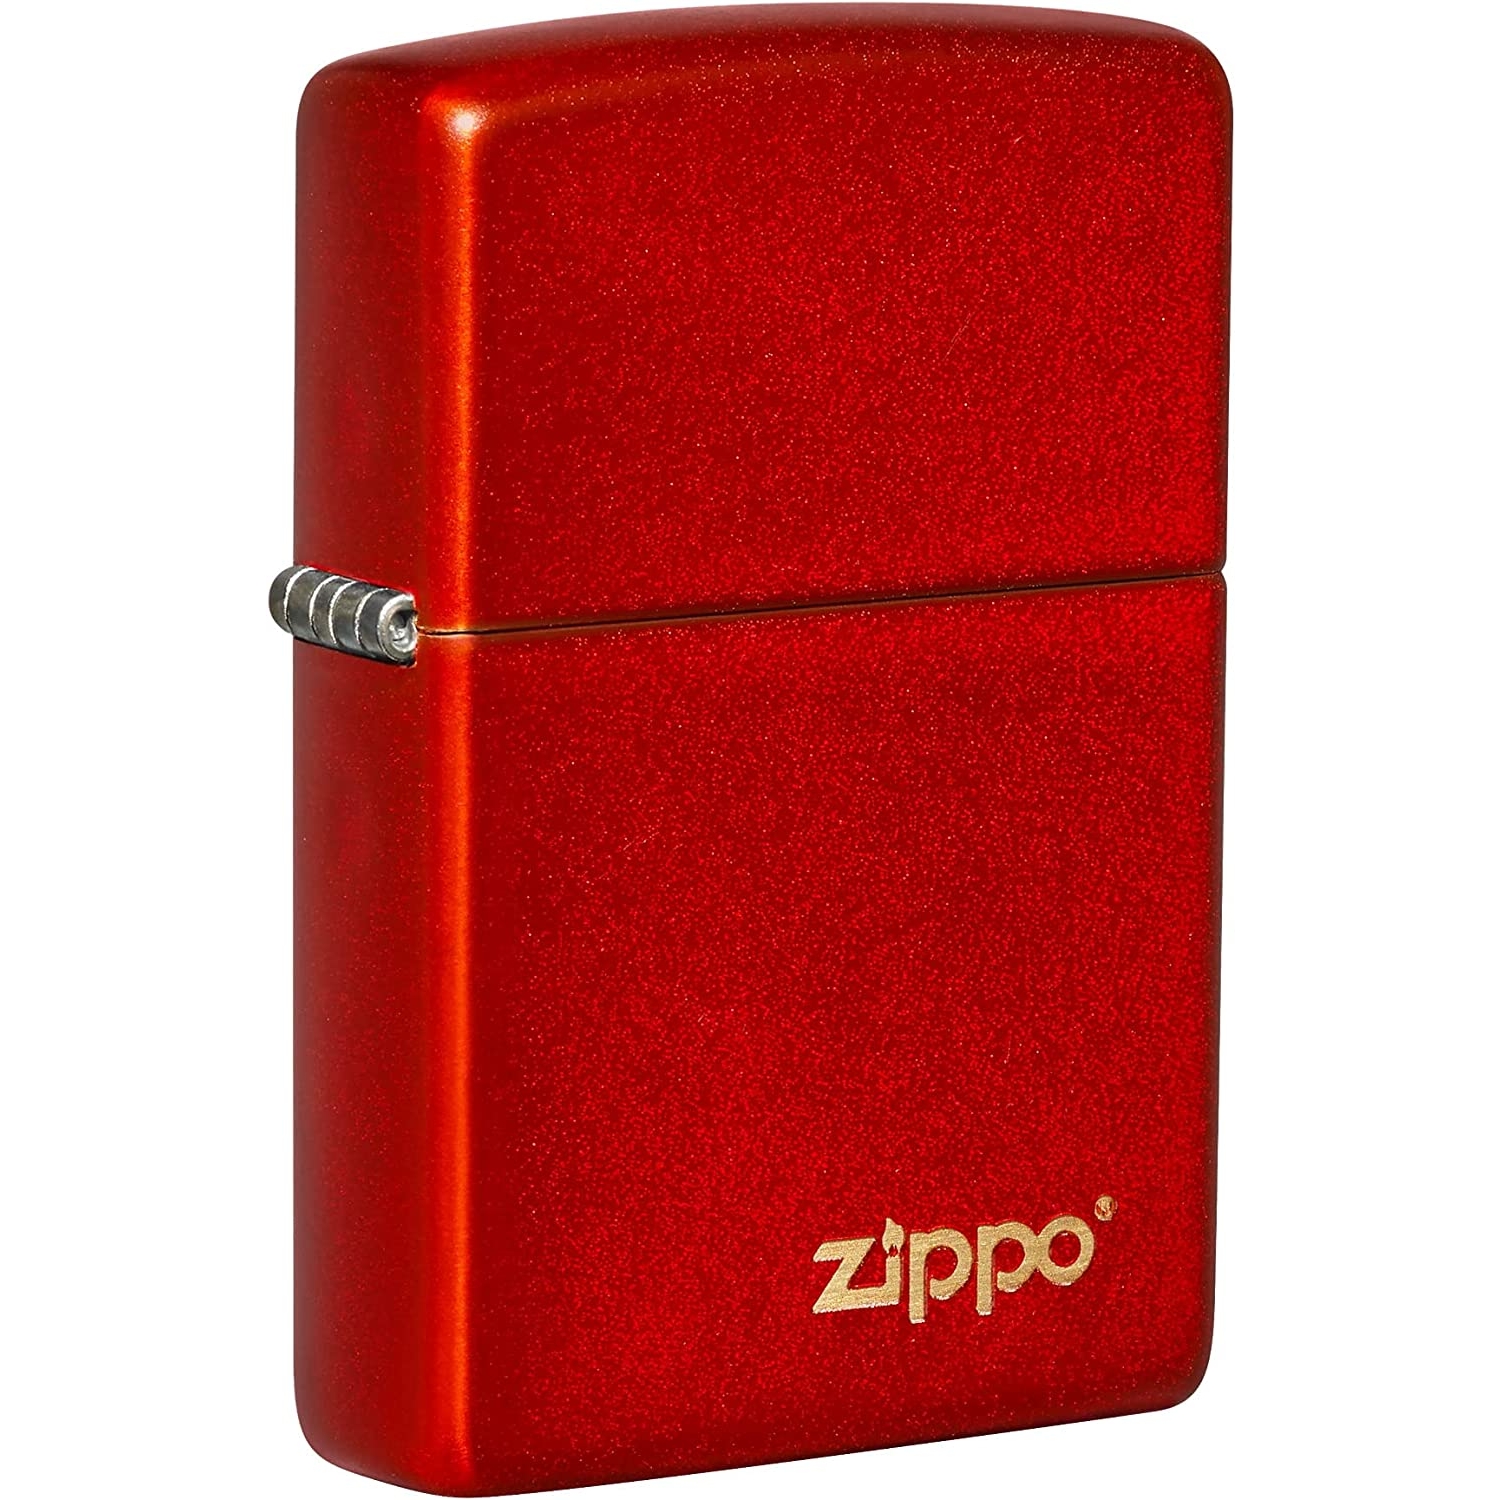 Zippo classic